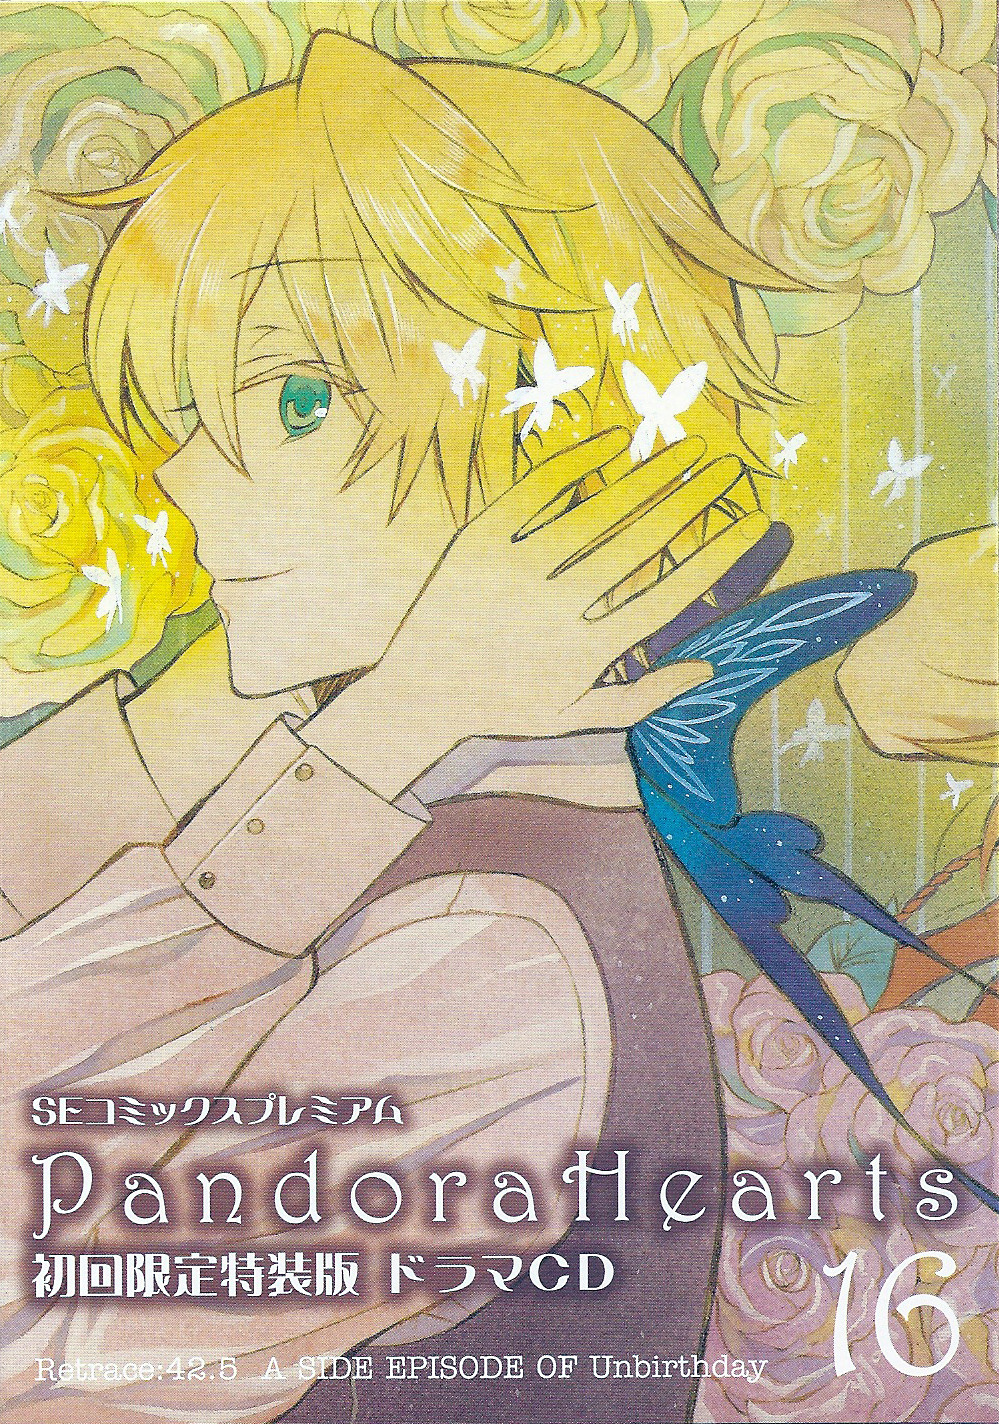 Drama CD Translations — Pandora Hearts Vol. 16 Special Drama CD ...